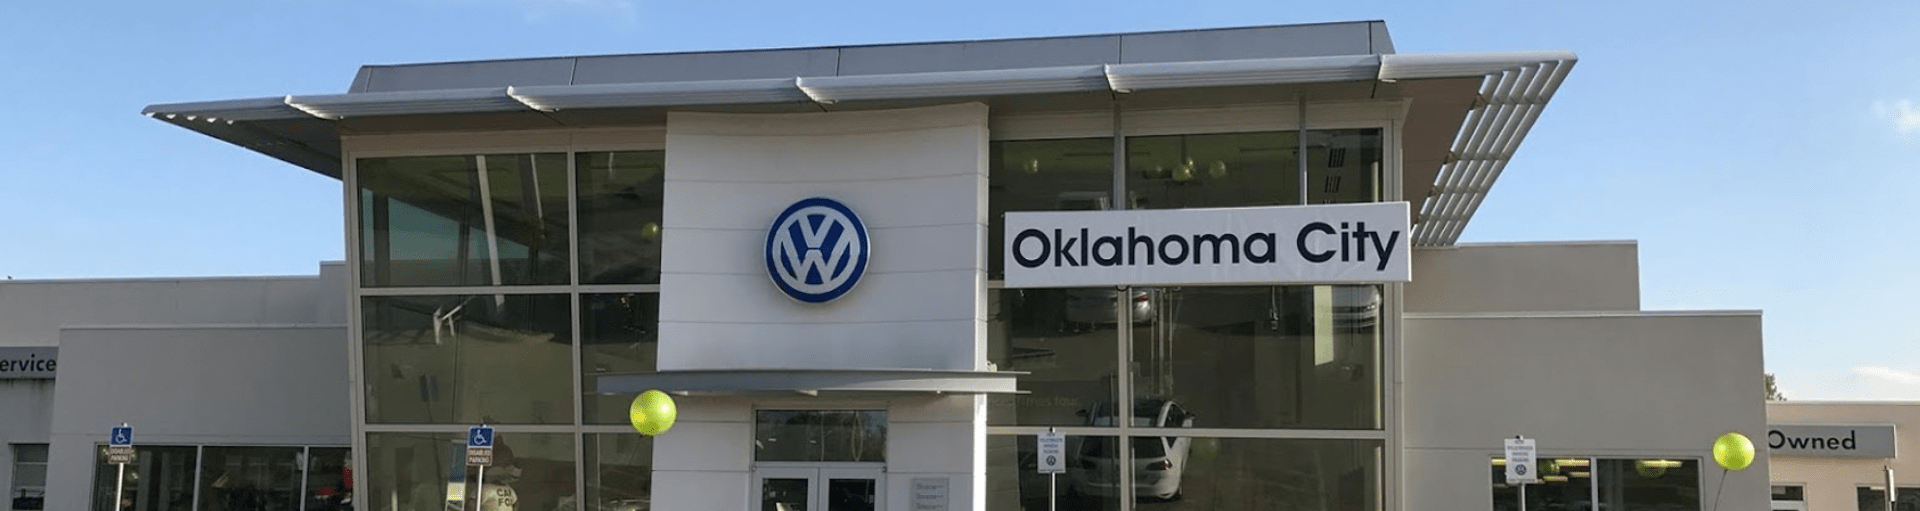 Oklahoma City Volkswagen Synthetic Oil Change